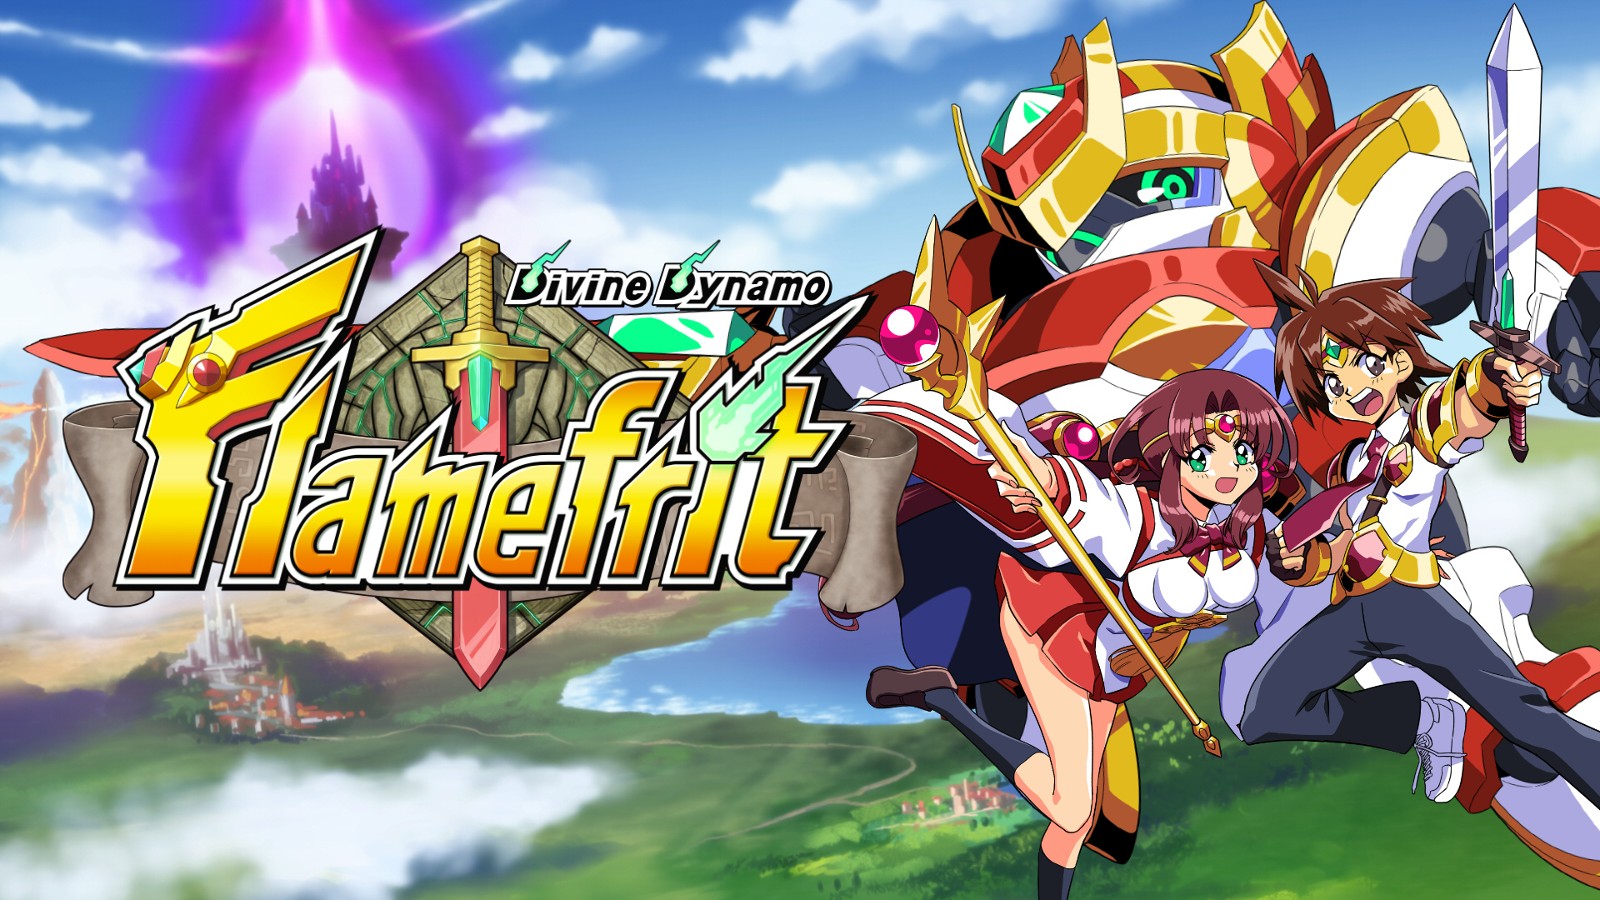 Divine Dynamo Flamefrit - banner(H)